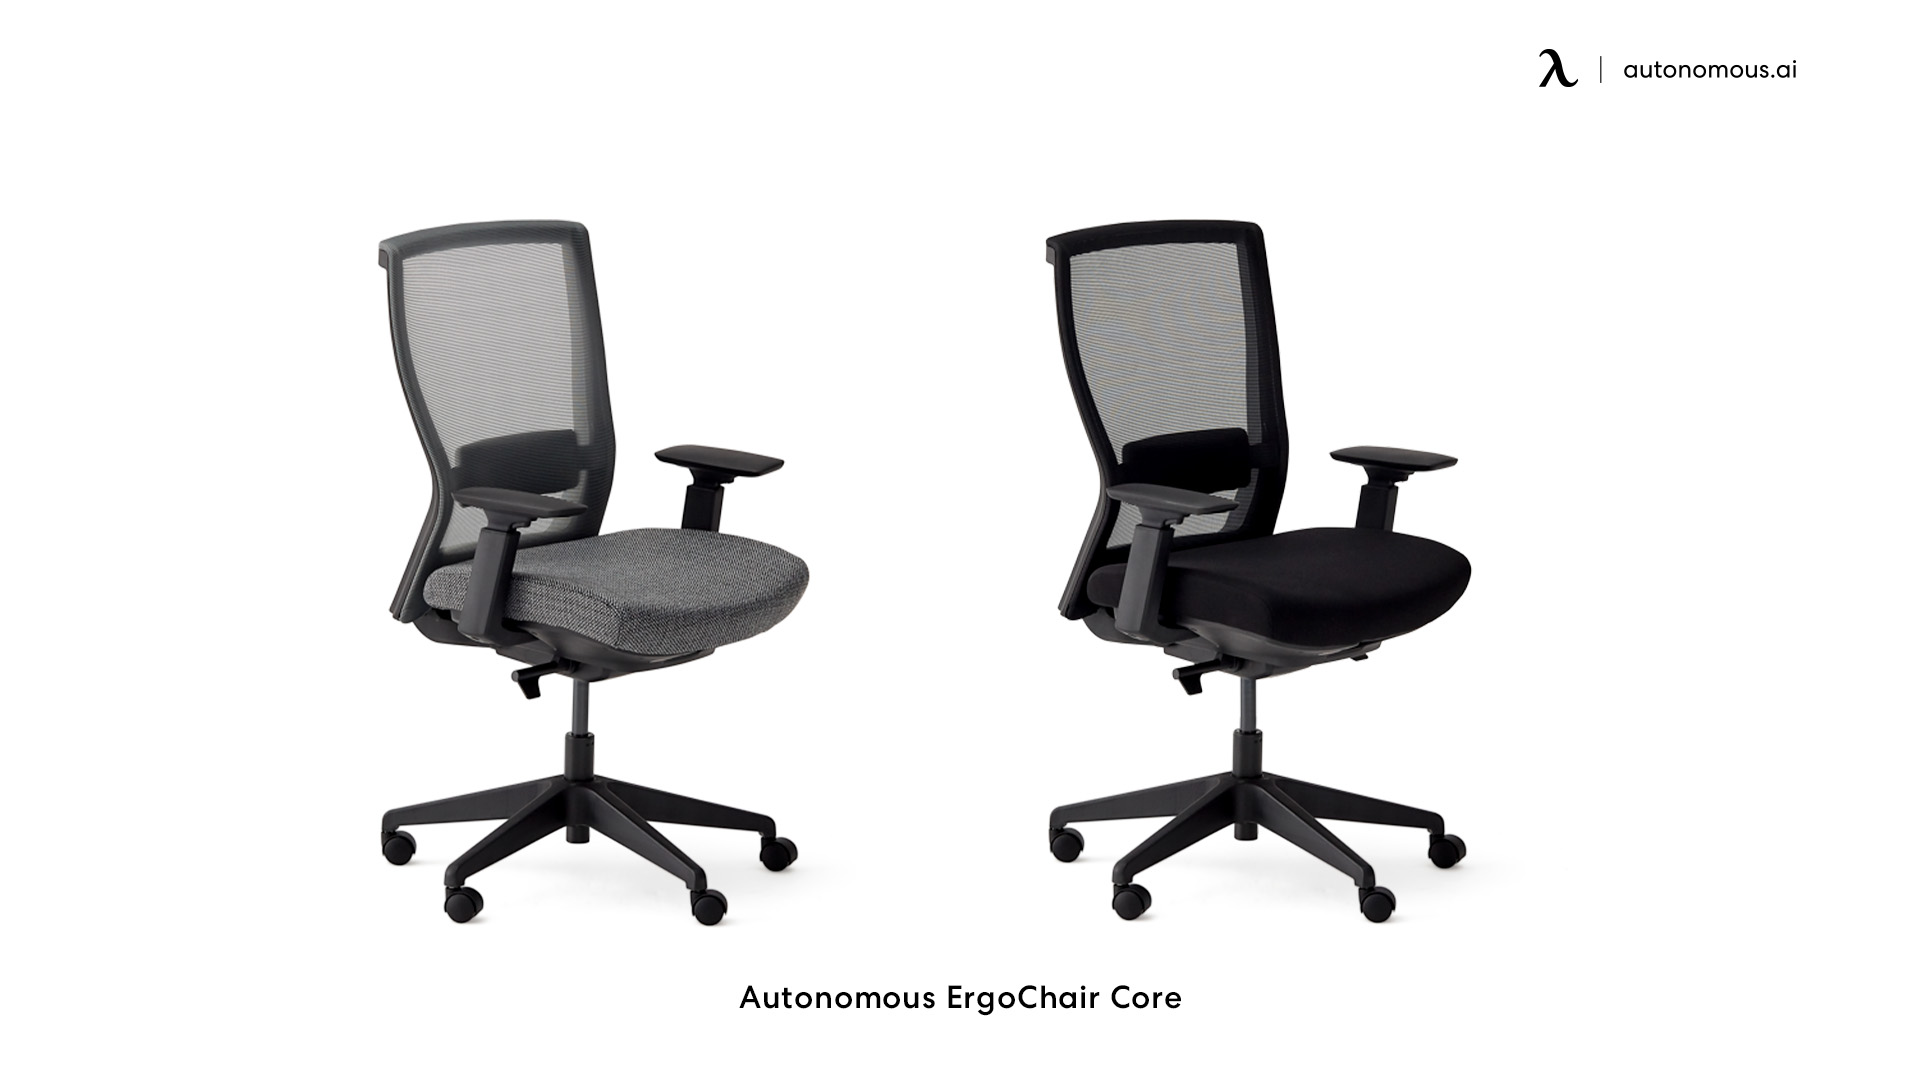 Autonomous ErgoChair Core home office chair